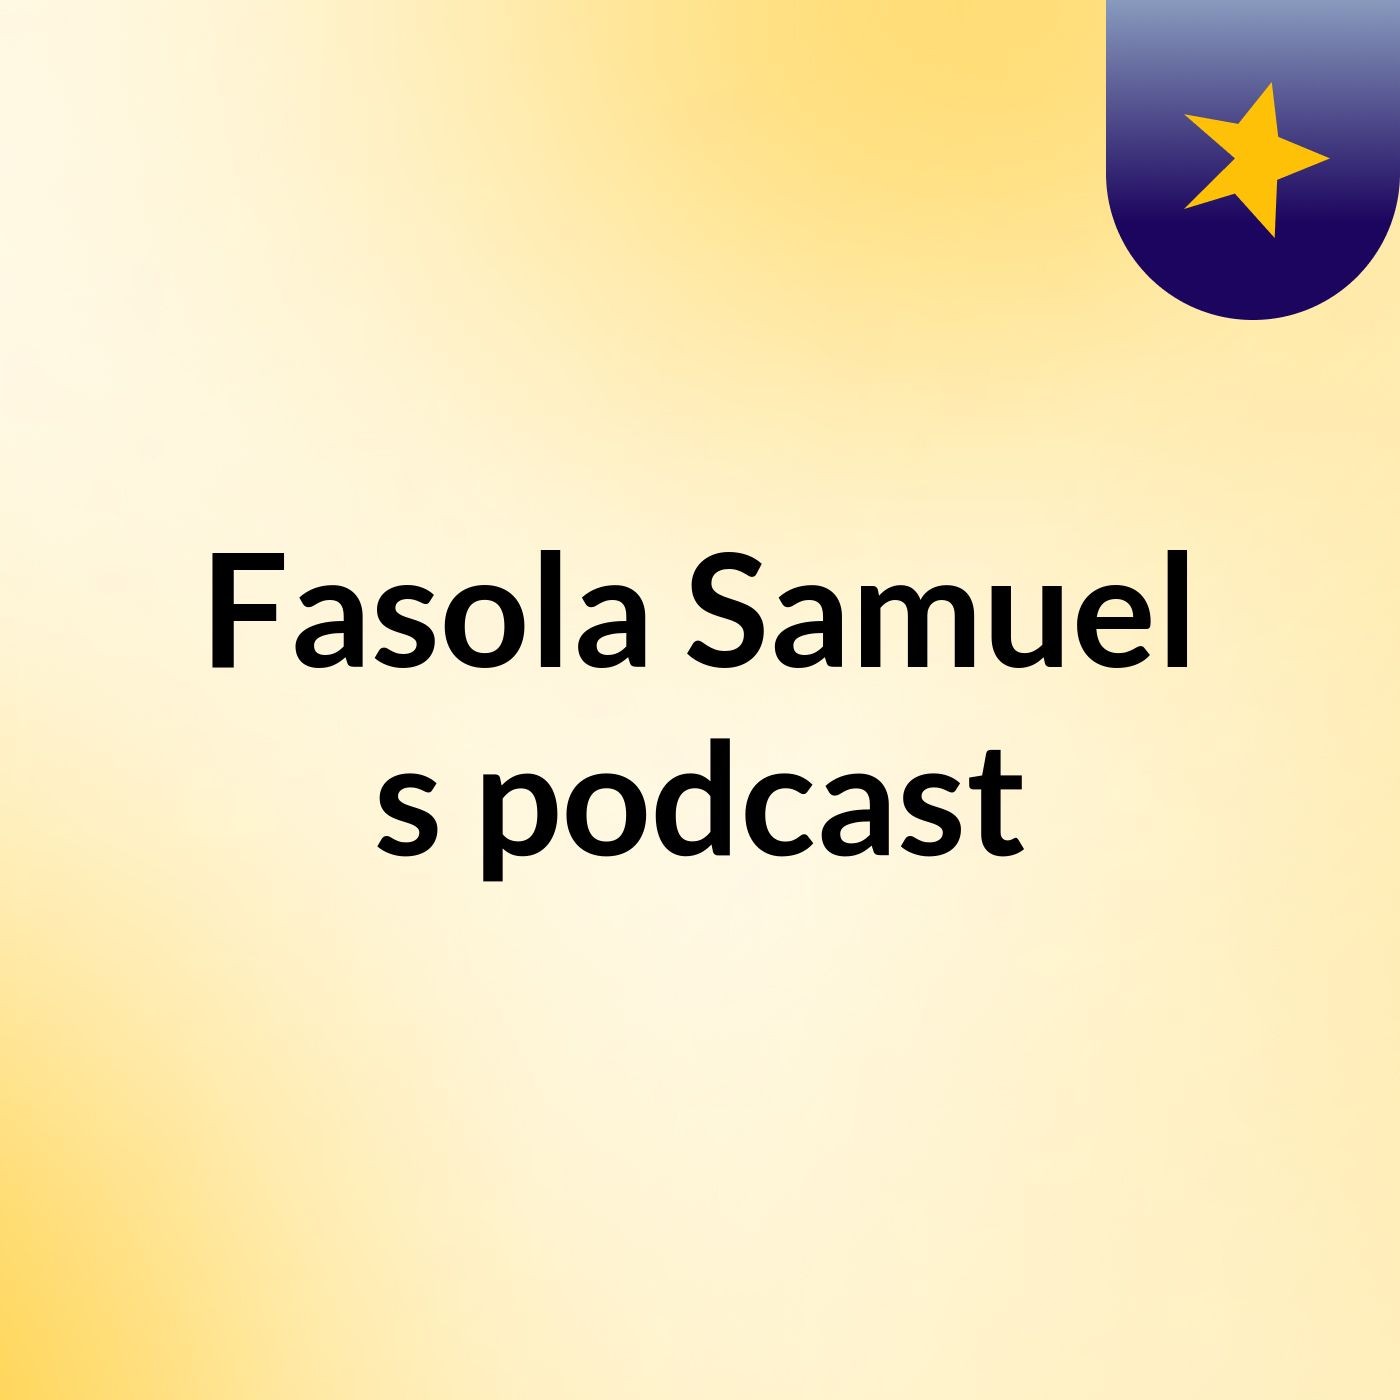 Episode 2 - Fasola Samuel's podcast